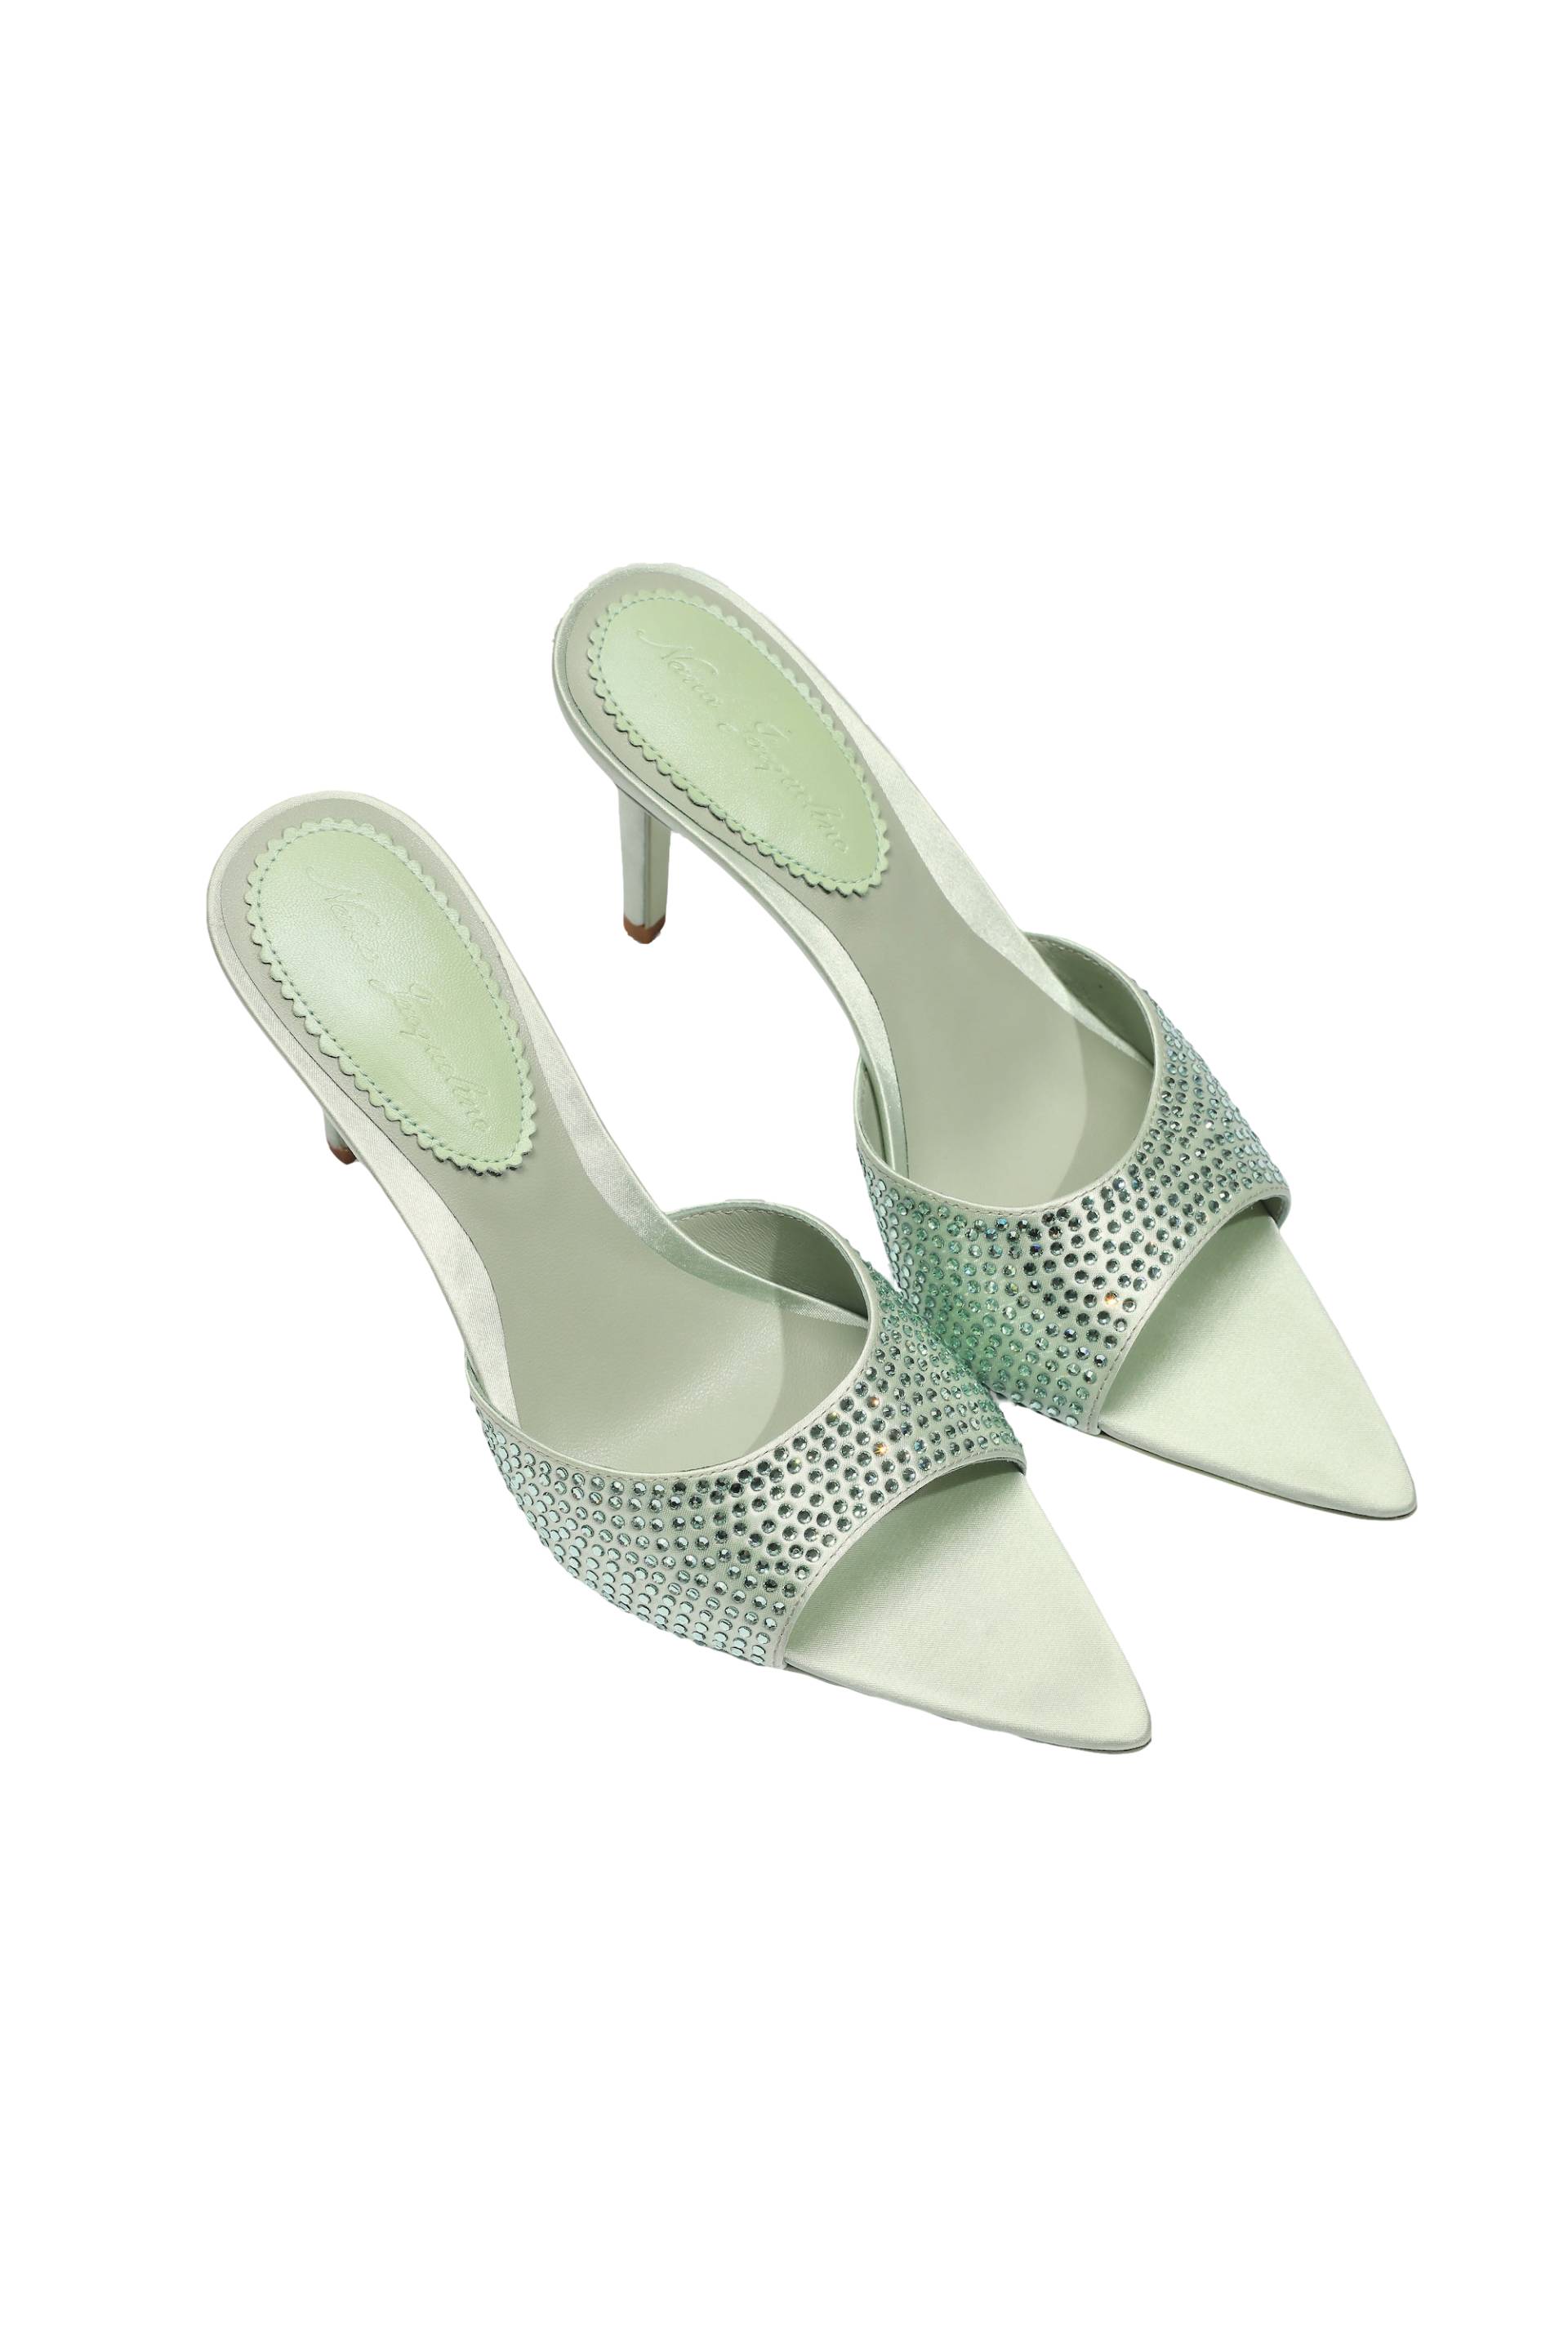 Kate Diamond Heels (Green) von Nana Jacqueline